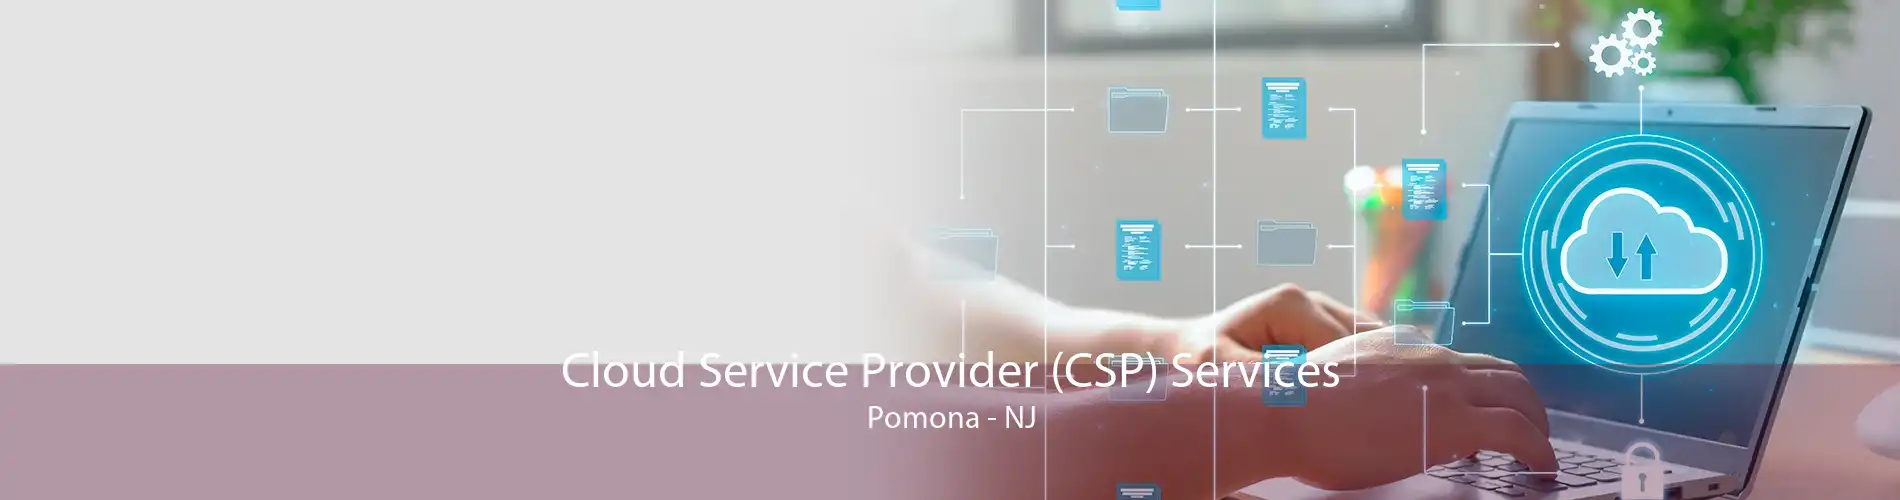 Cloud Service Provider (CSP) Services Pomona - NJ